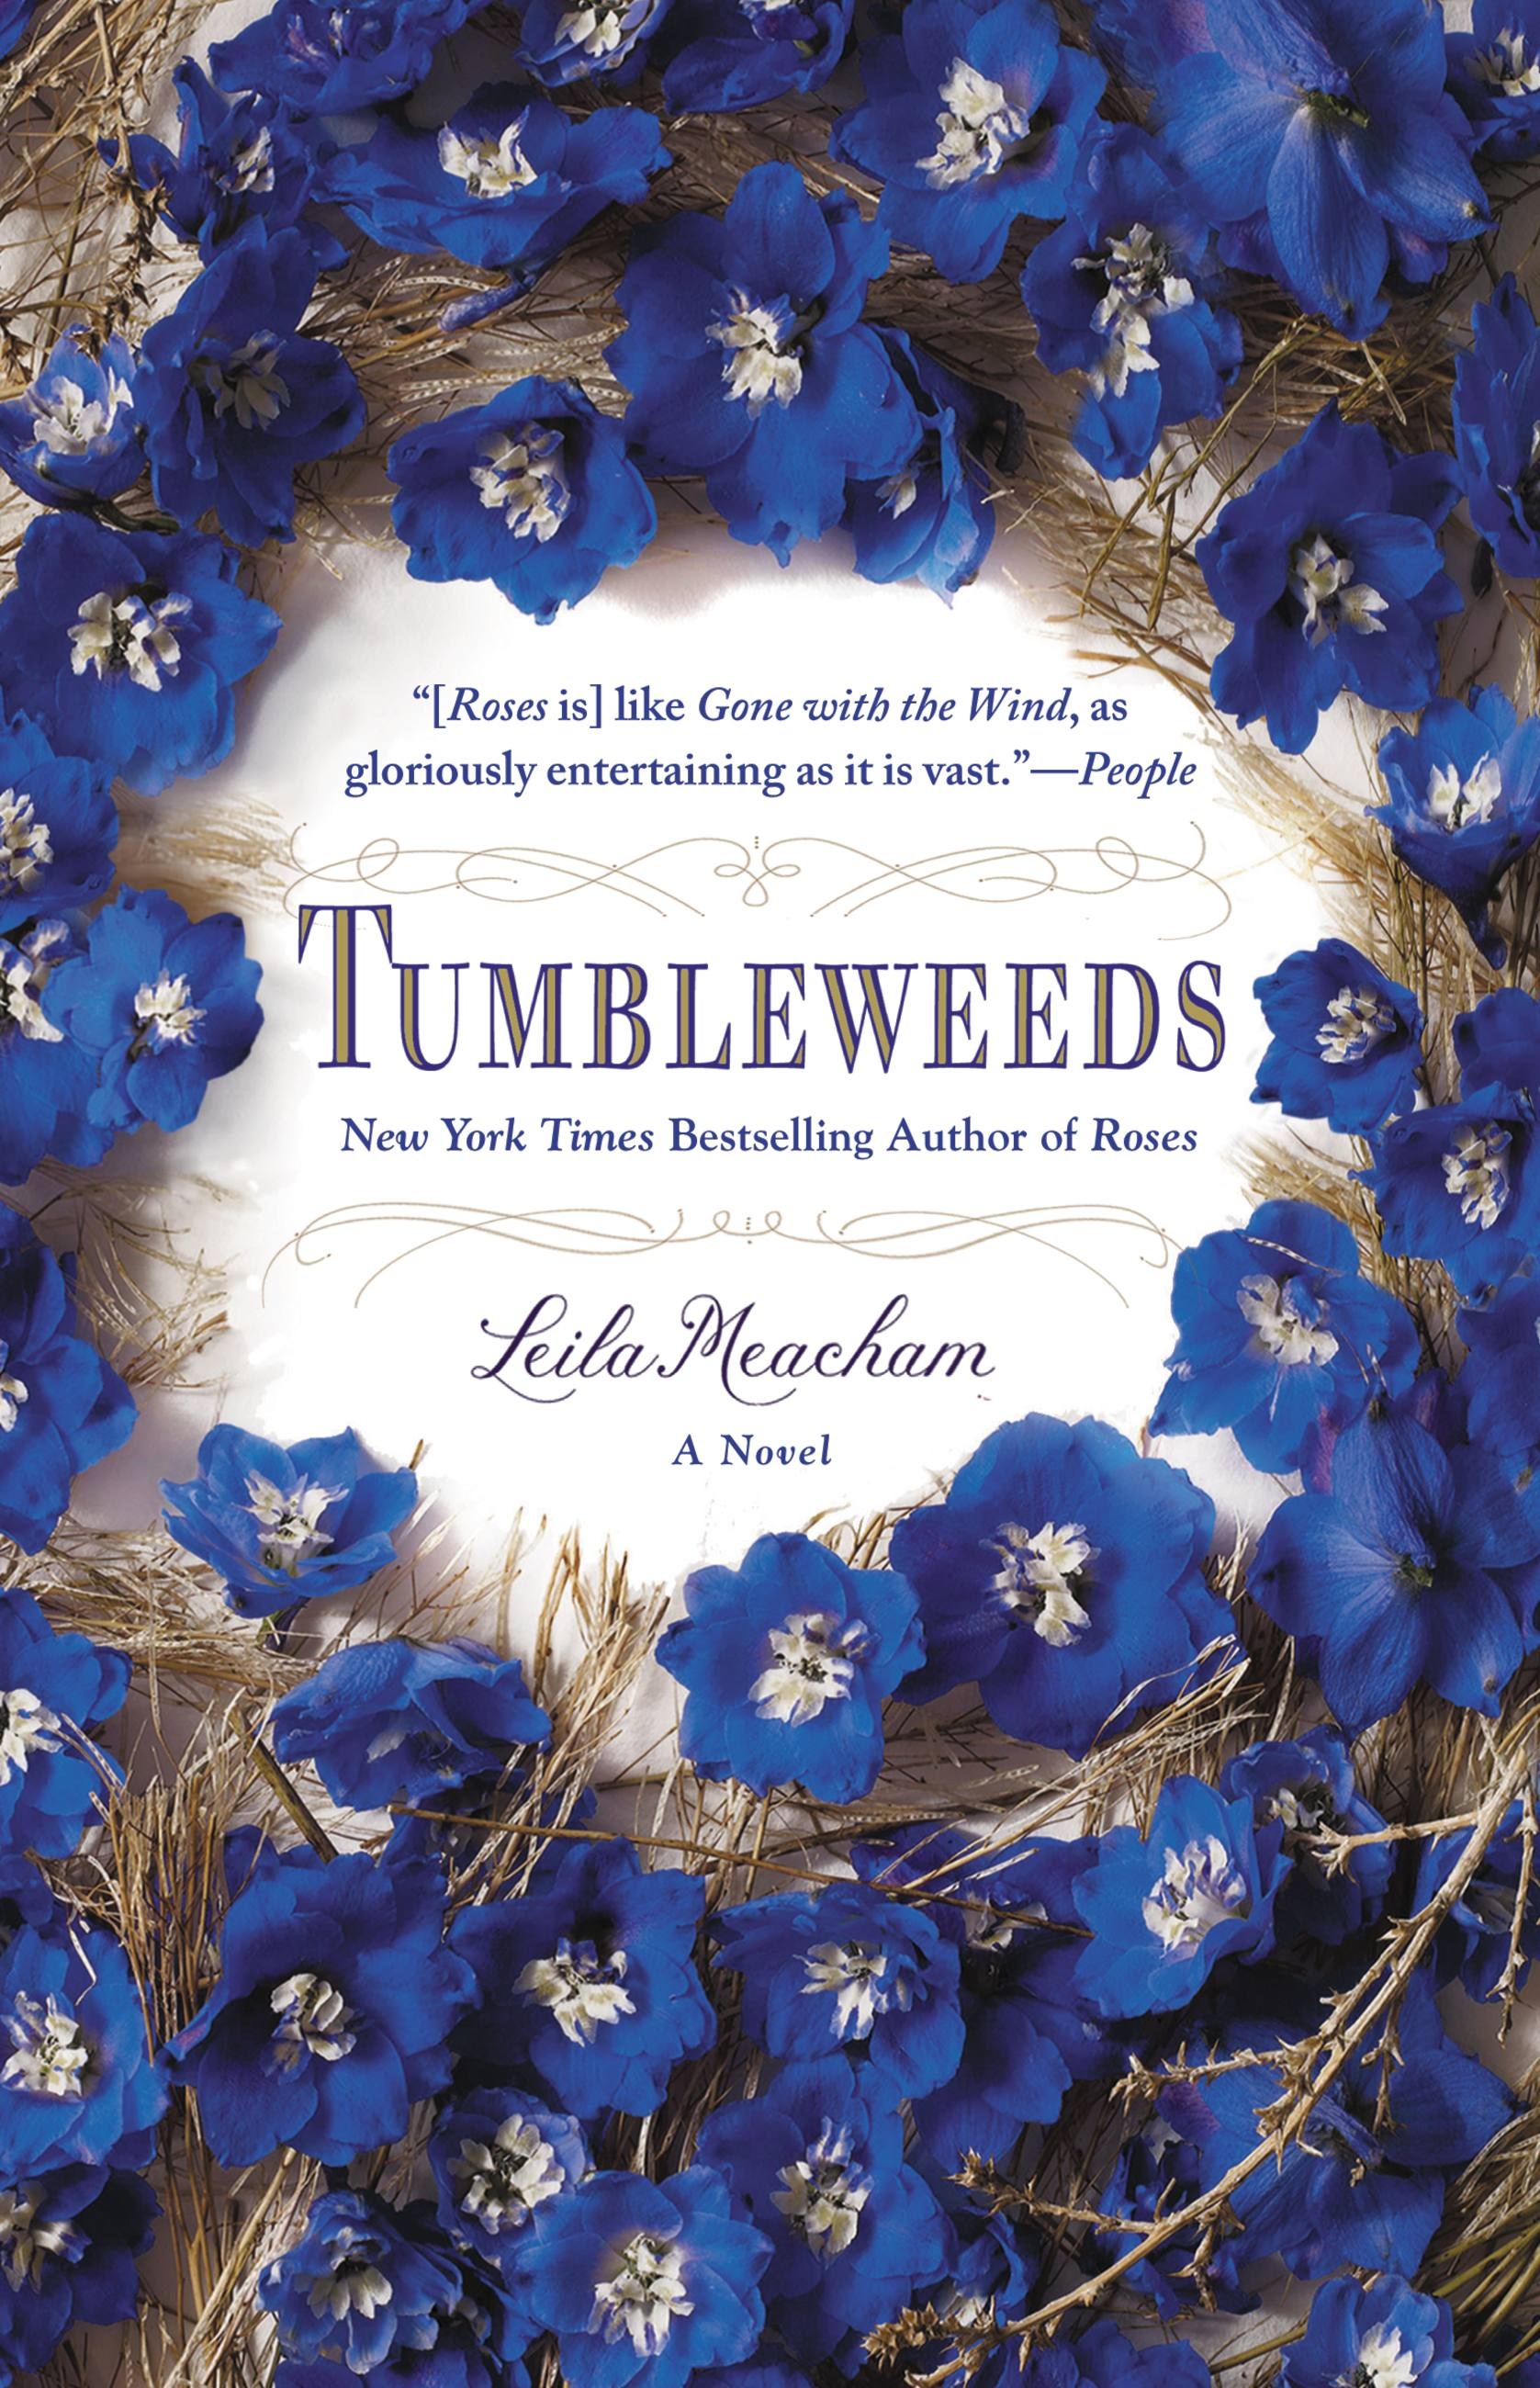 Tumbleweeds by Leila Meacham | Hachette Book Group